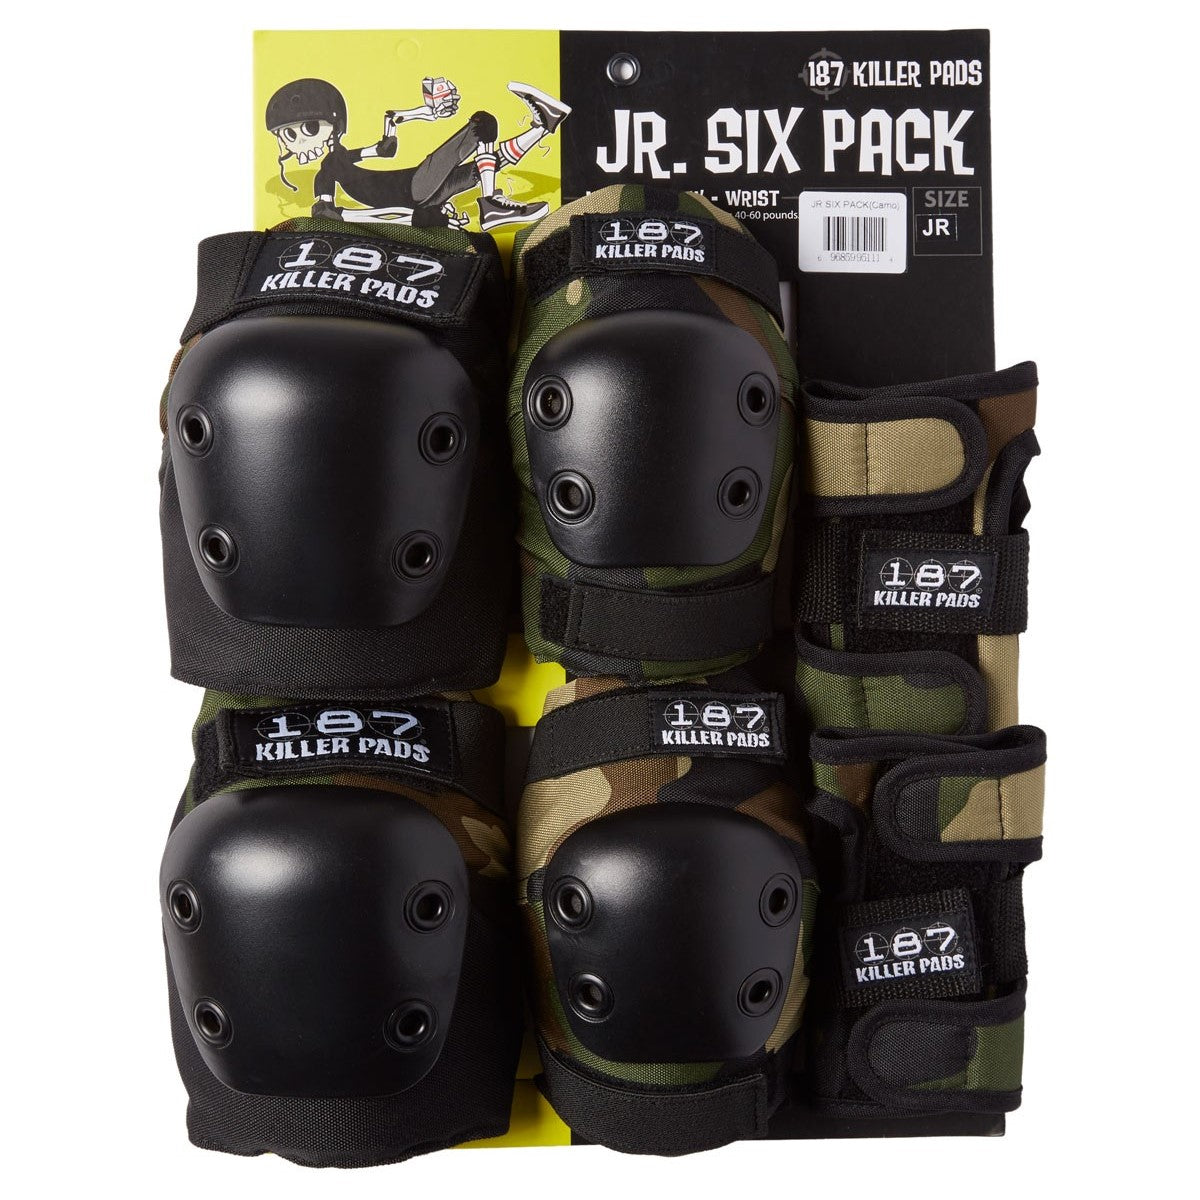 Proteccion Junior 6 Pack set camuflado